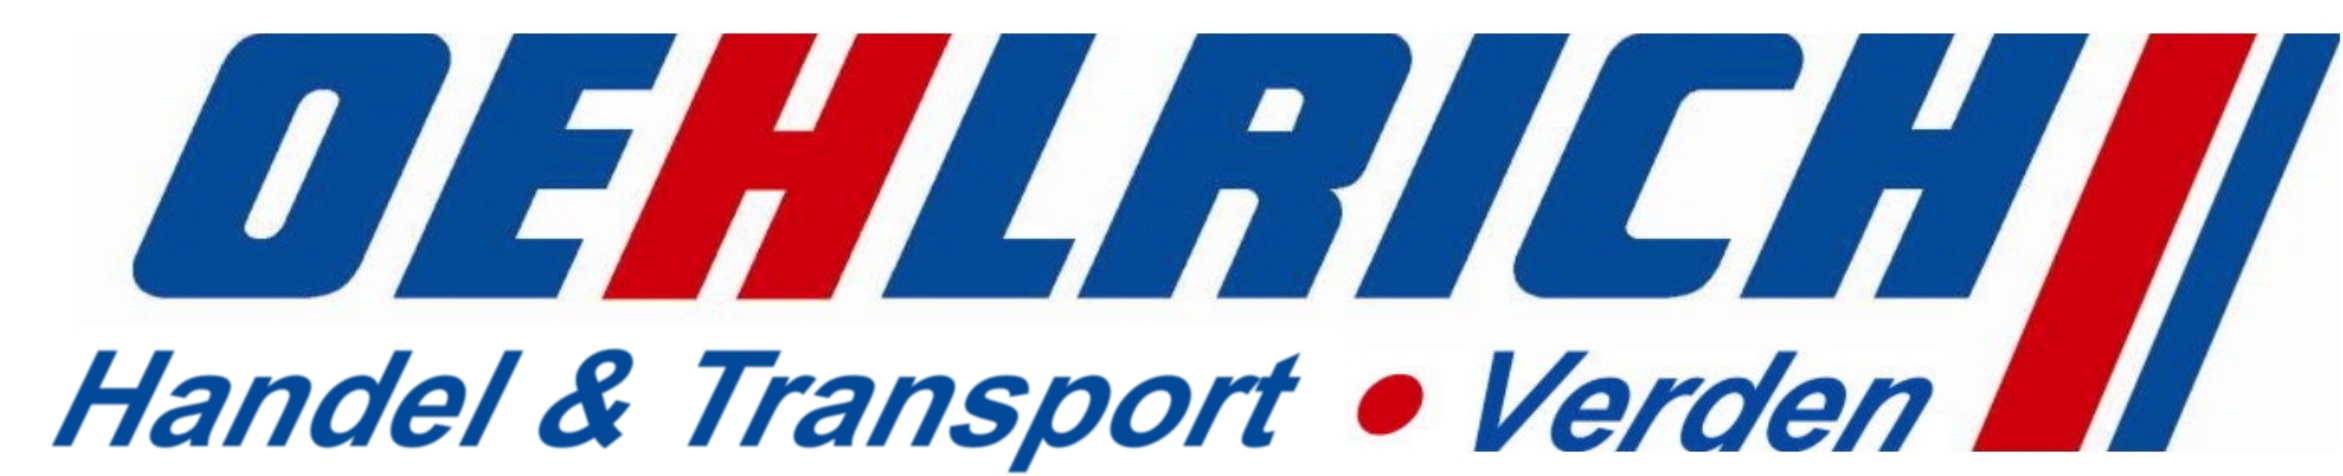 Oehlrich Handel & Transport GmbH & Co.KG